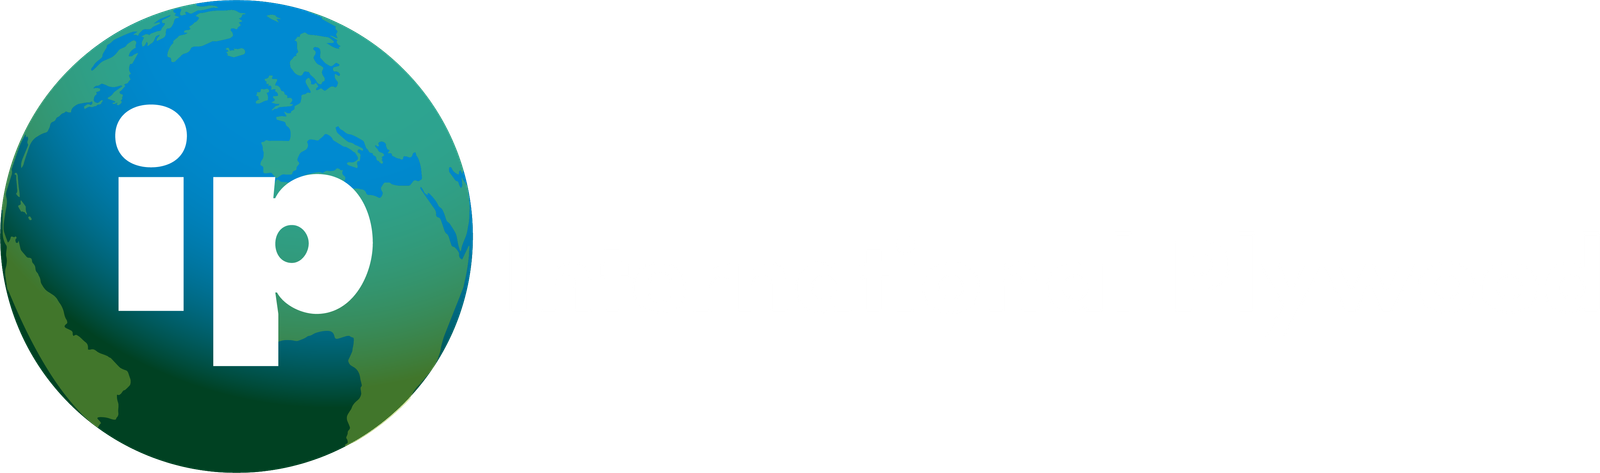 Logo Internatioal Plywood_wit